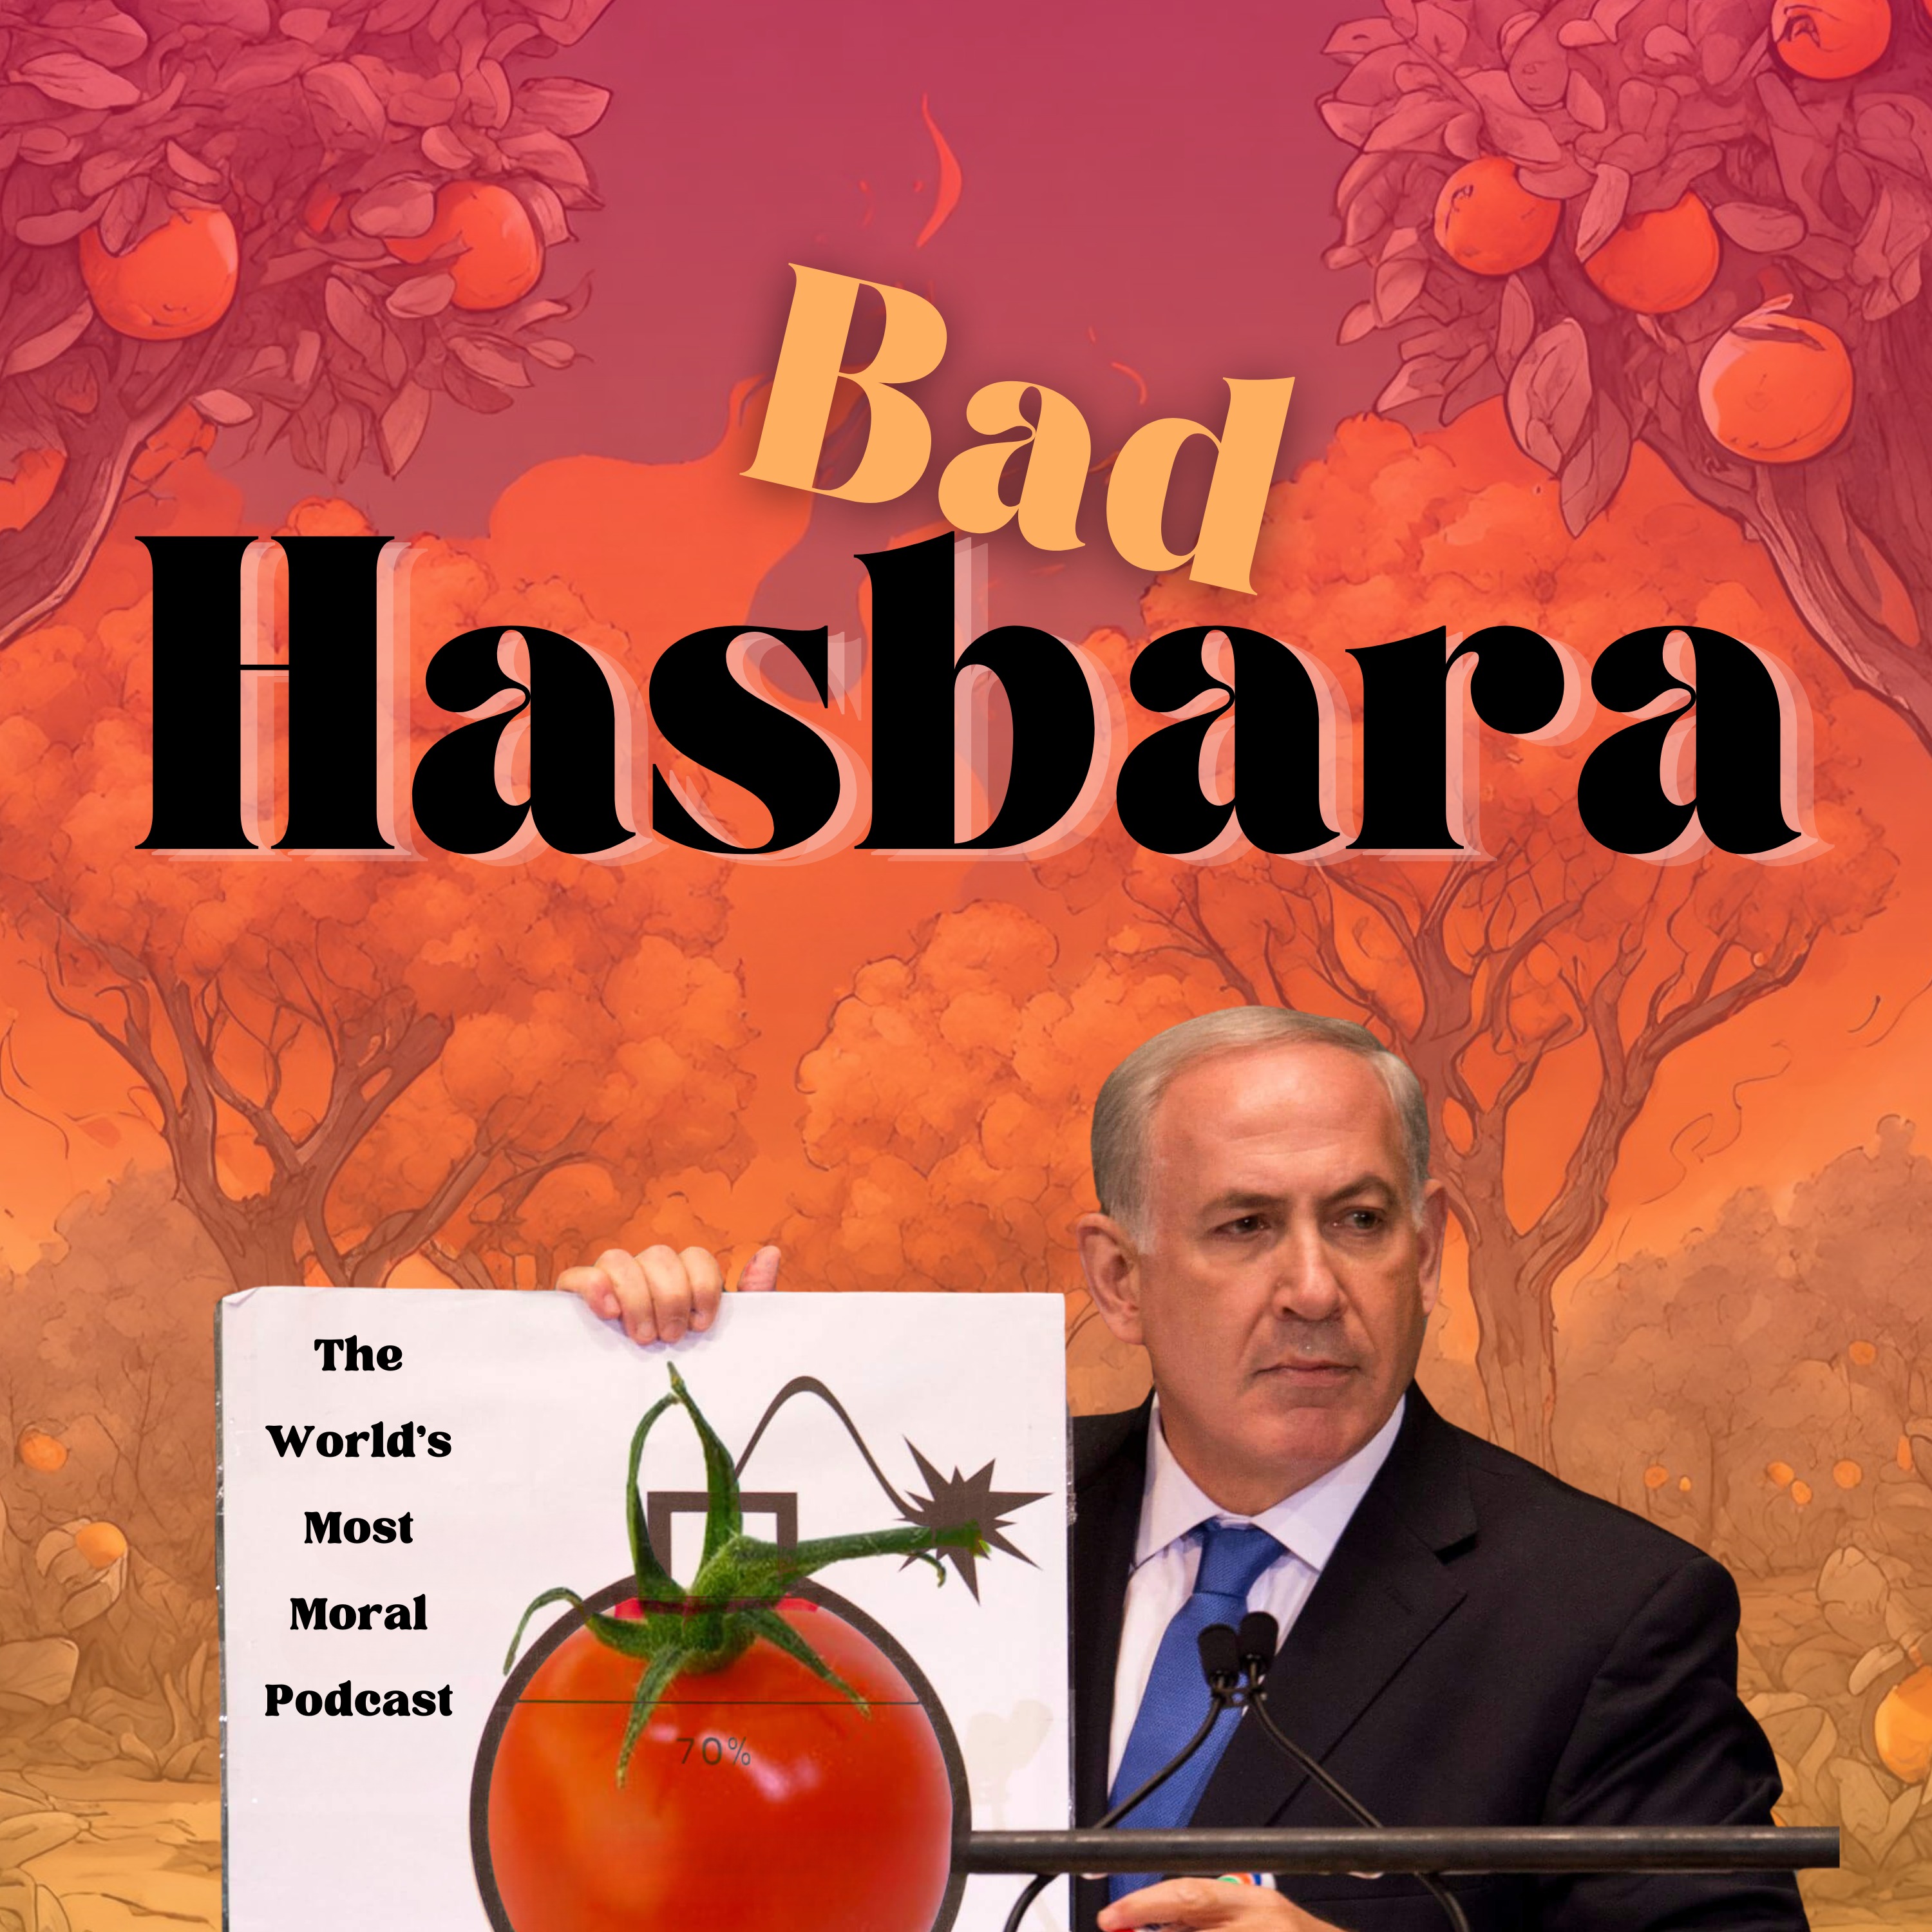 Welcome To Bad Hasbara